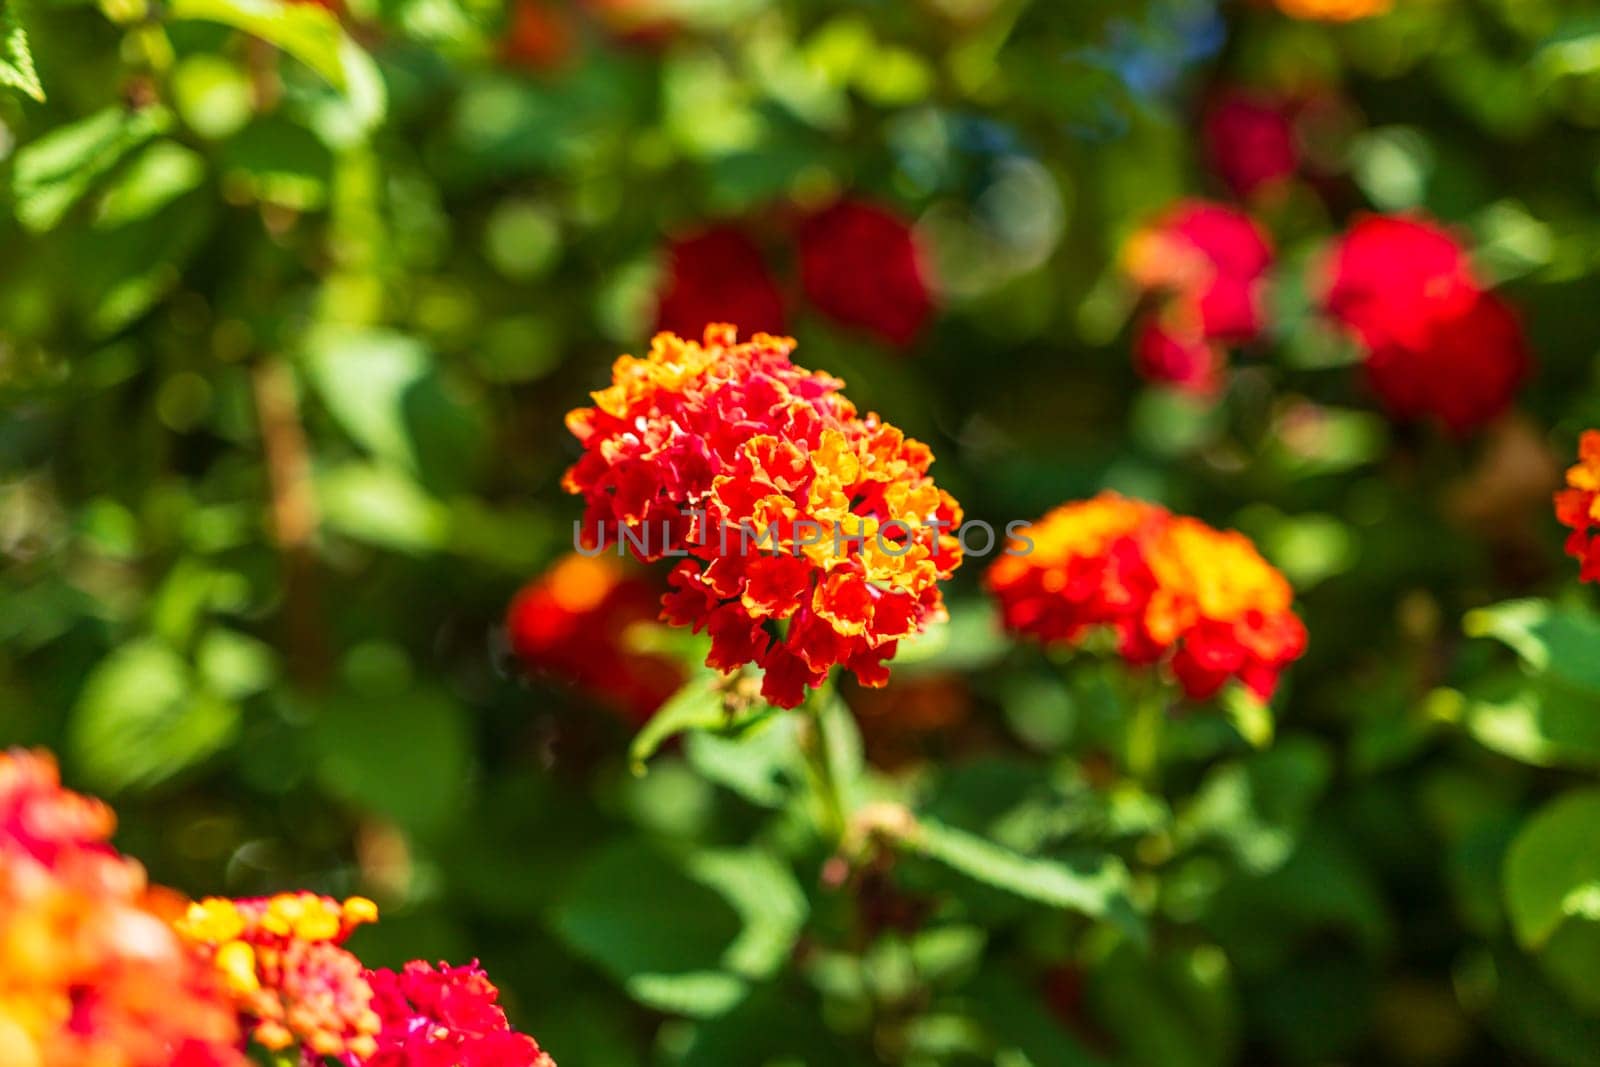 Close-up detail of red flower by vladispas